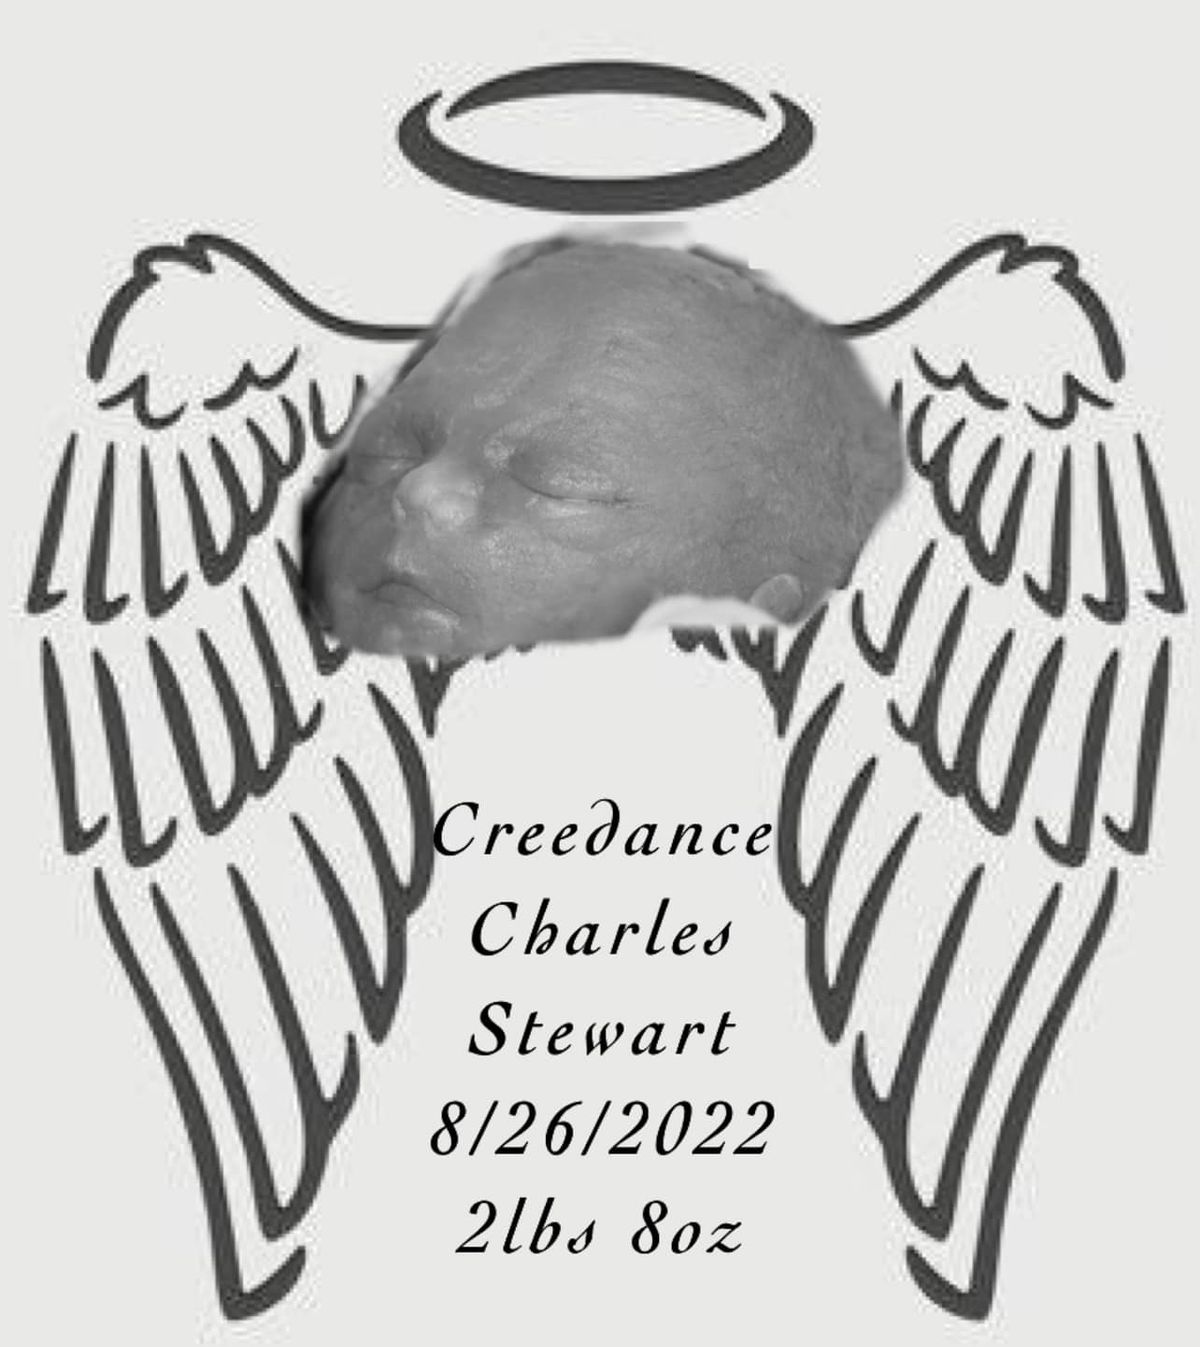 Blood Drive in Memory of Creedance Stewart